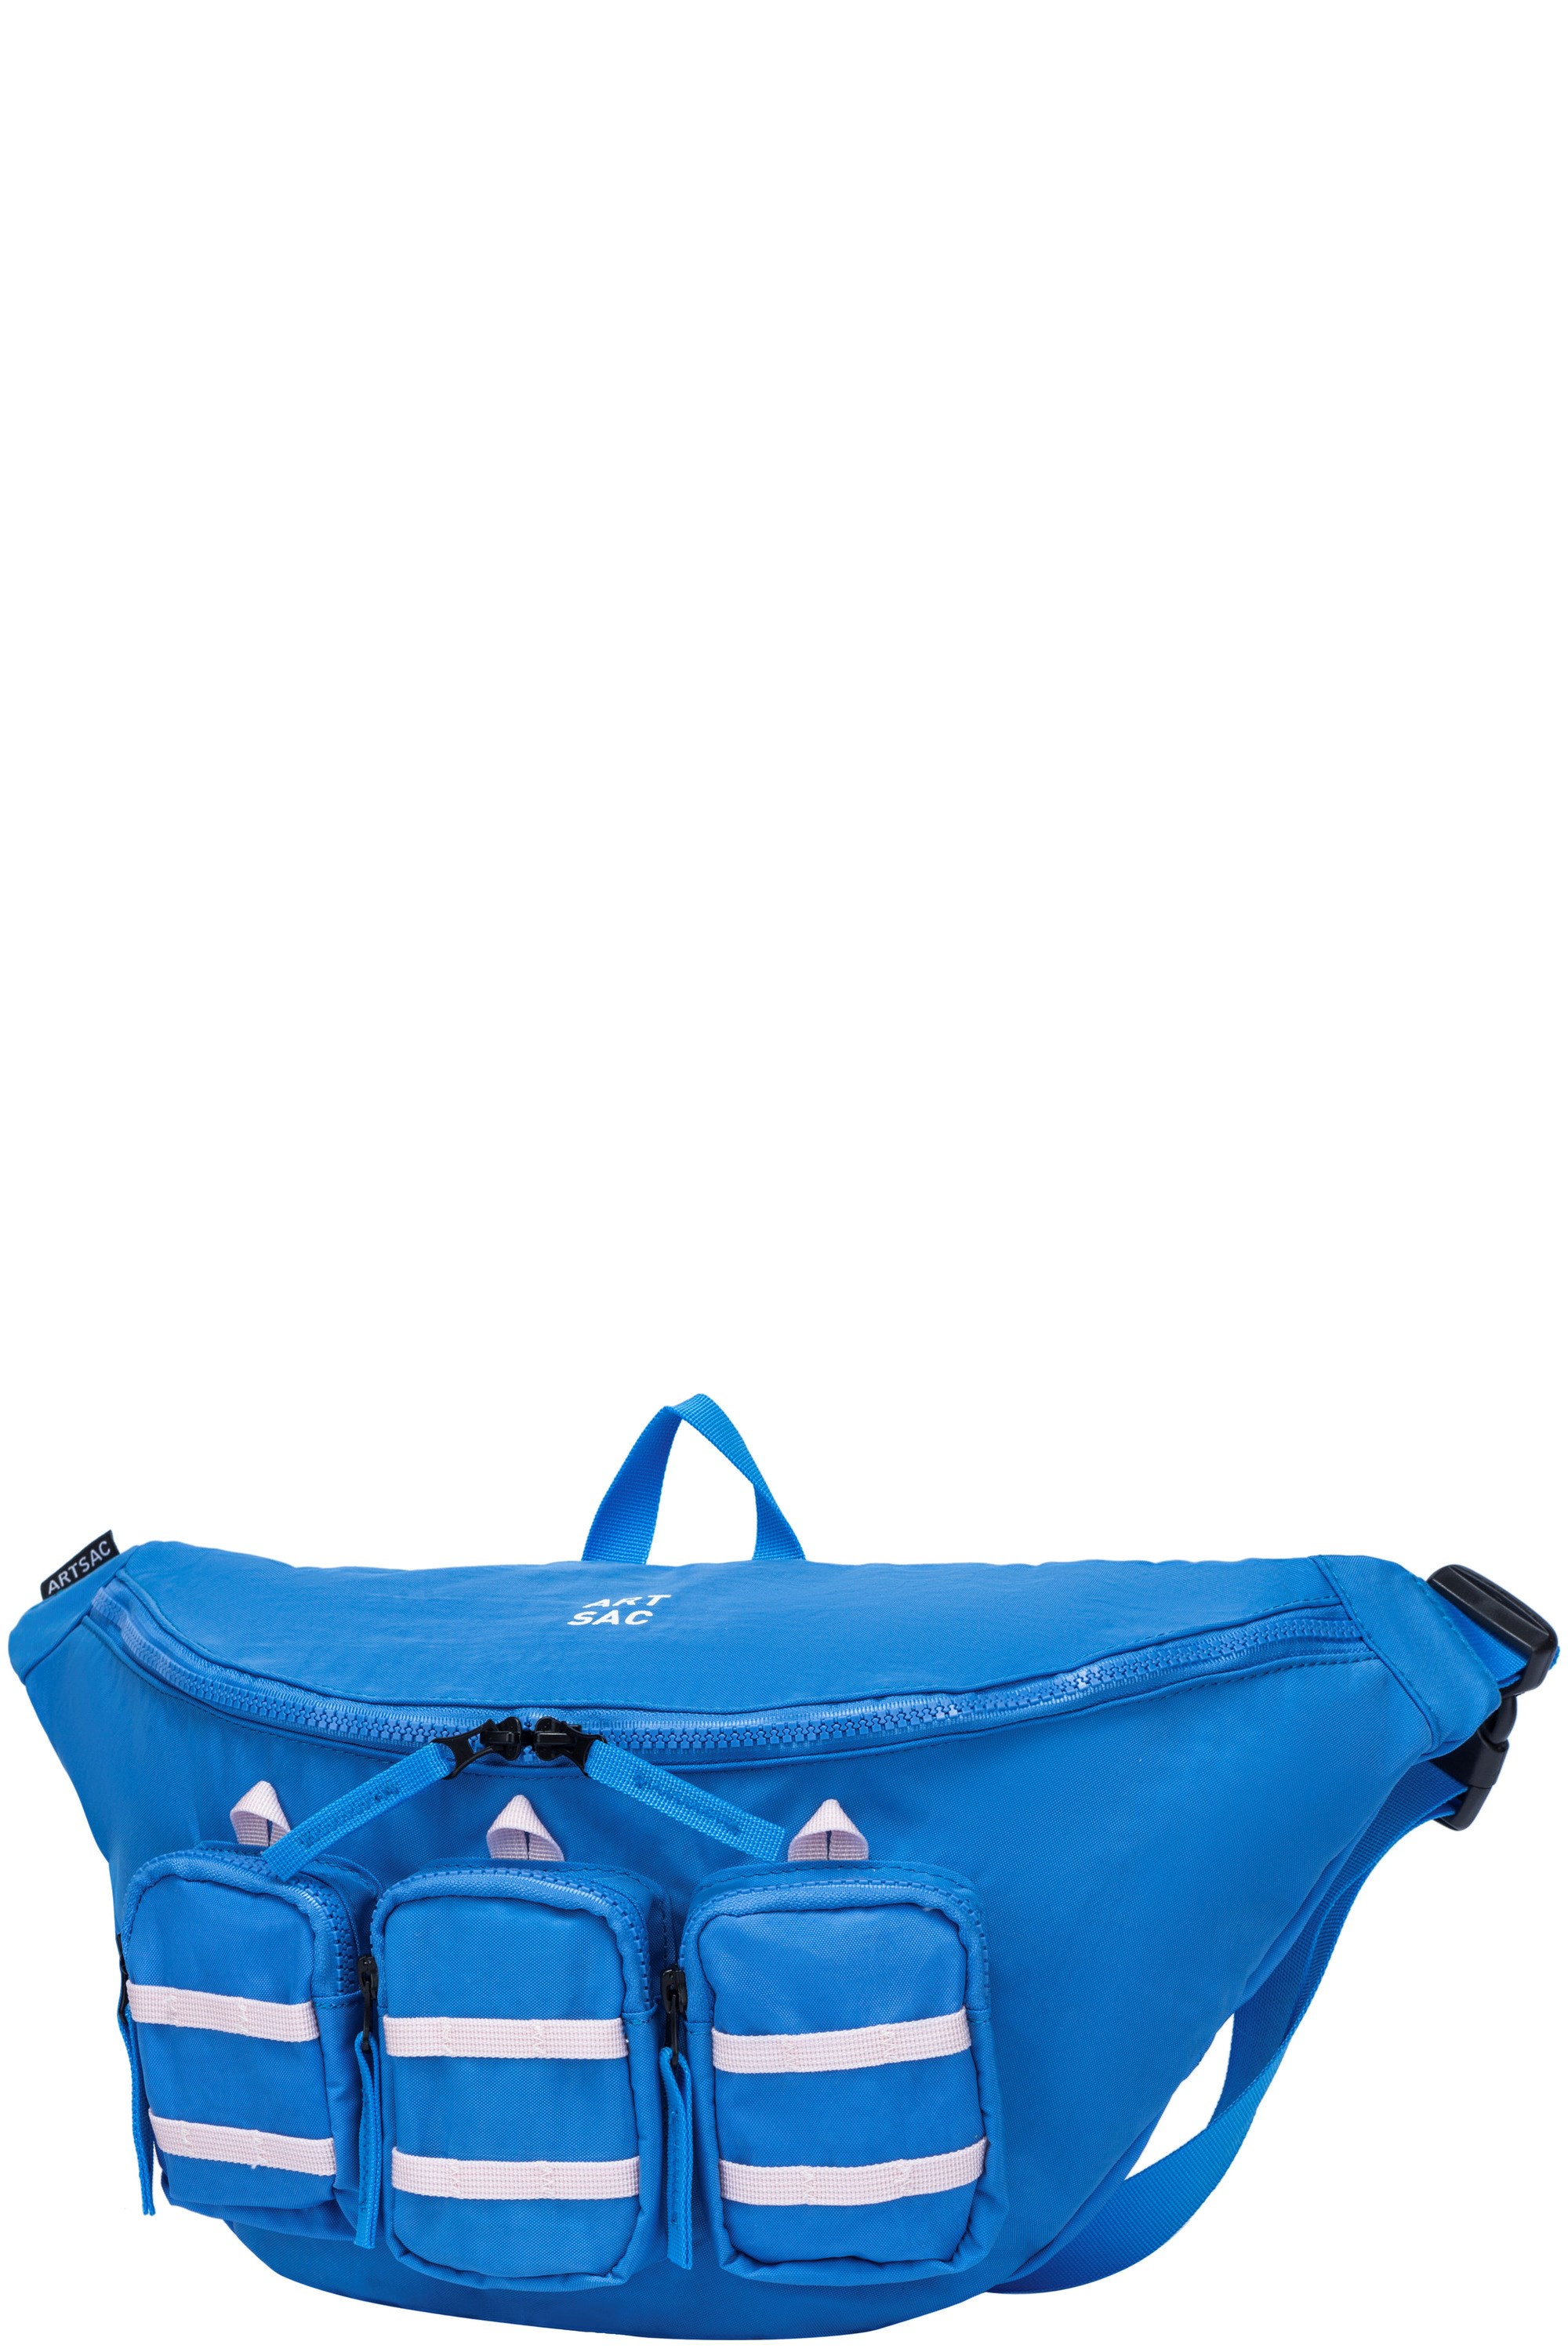 ARTSAC Jaspar Triple Pocket Sling Cross Body Bag in Blue